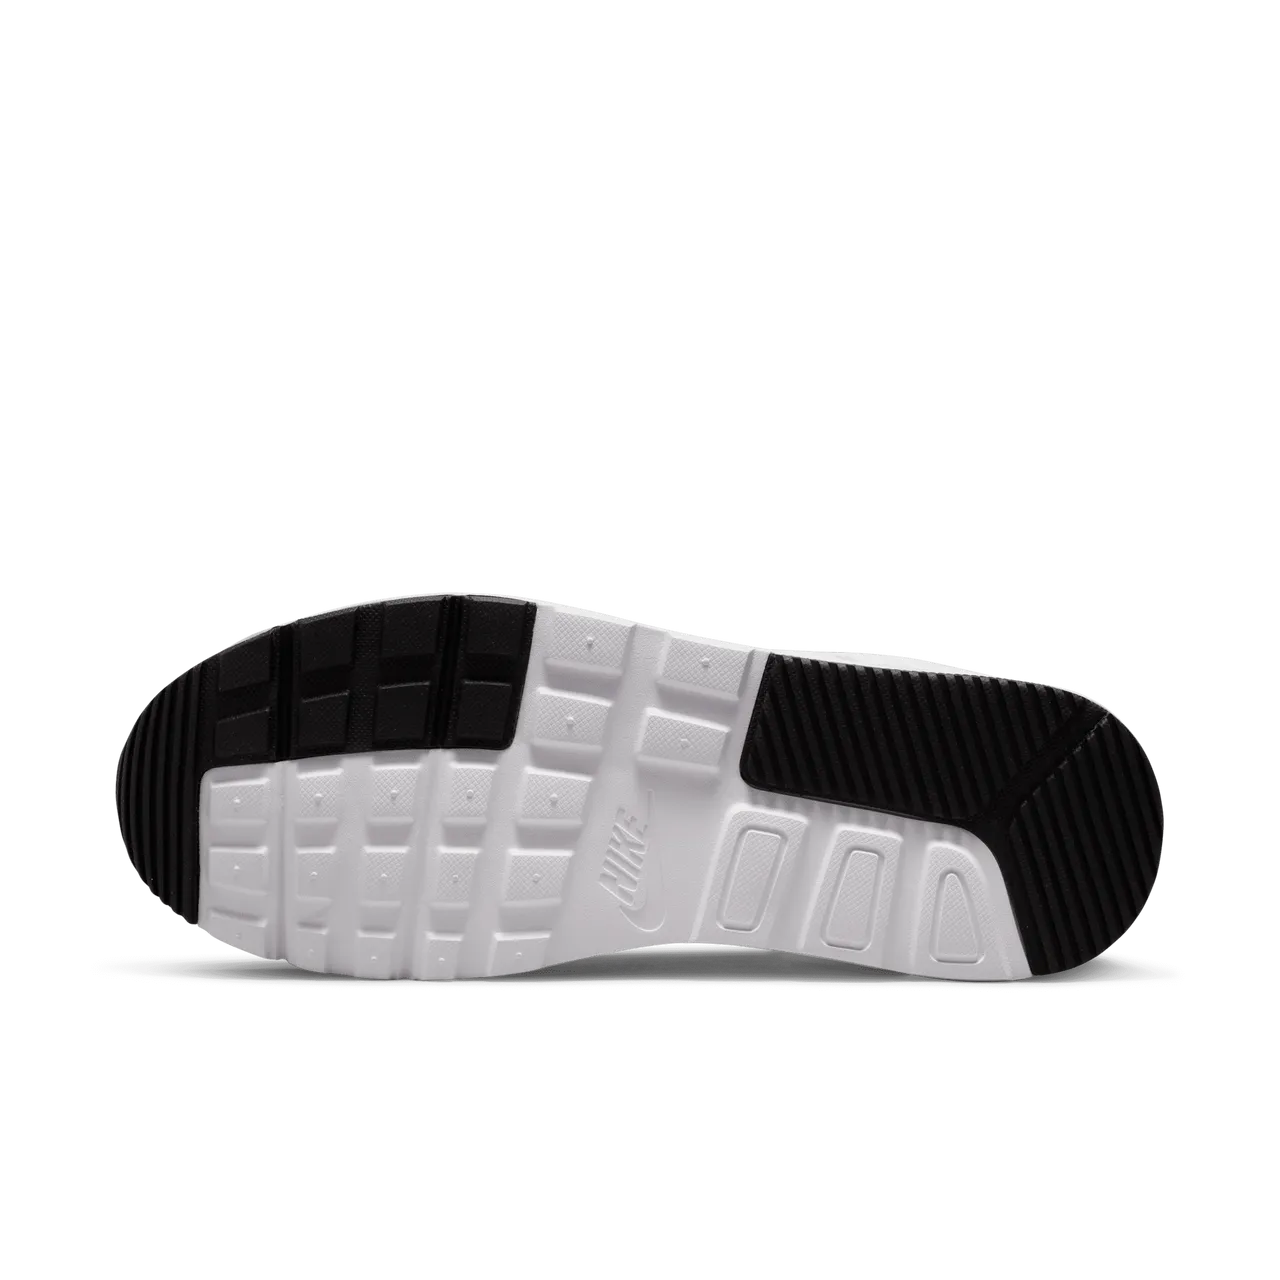 Nike Air Max SC Men's Shoes - White